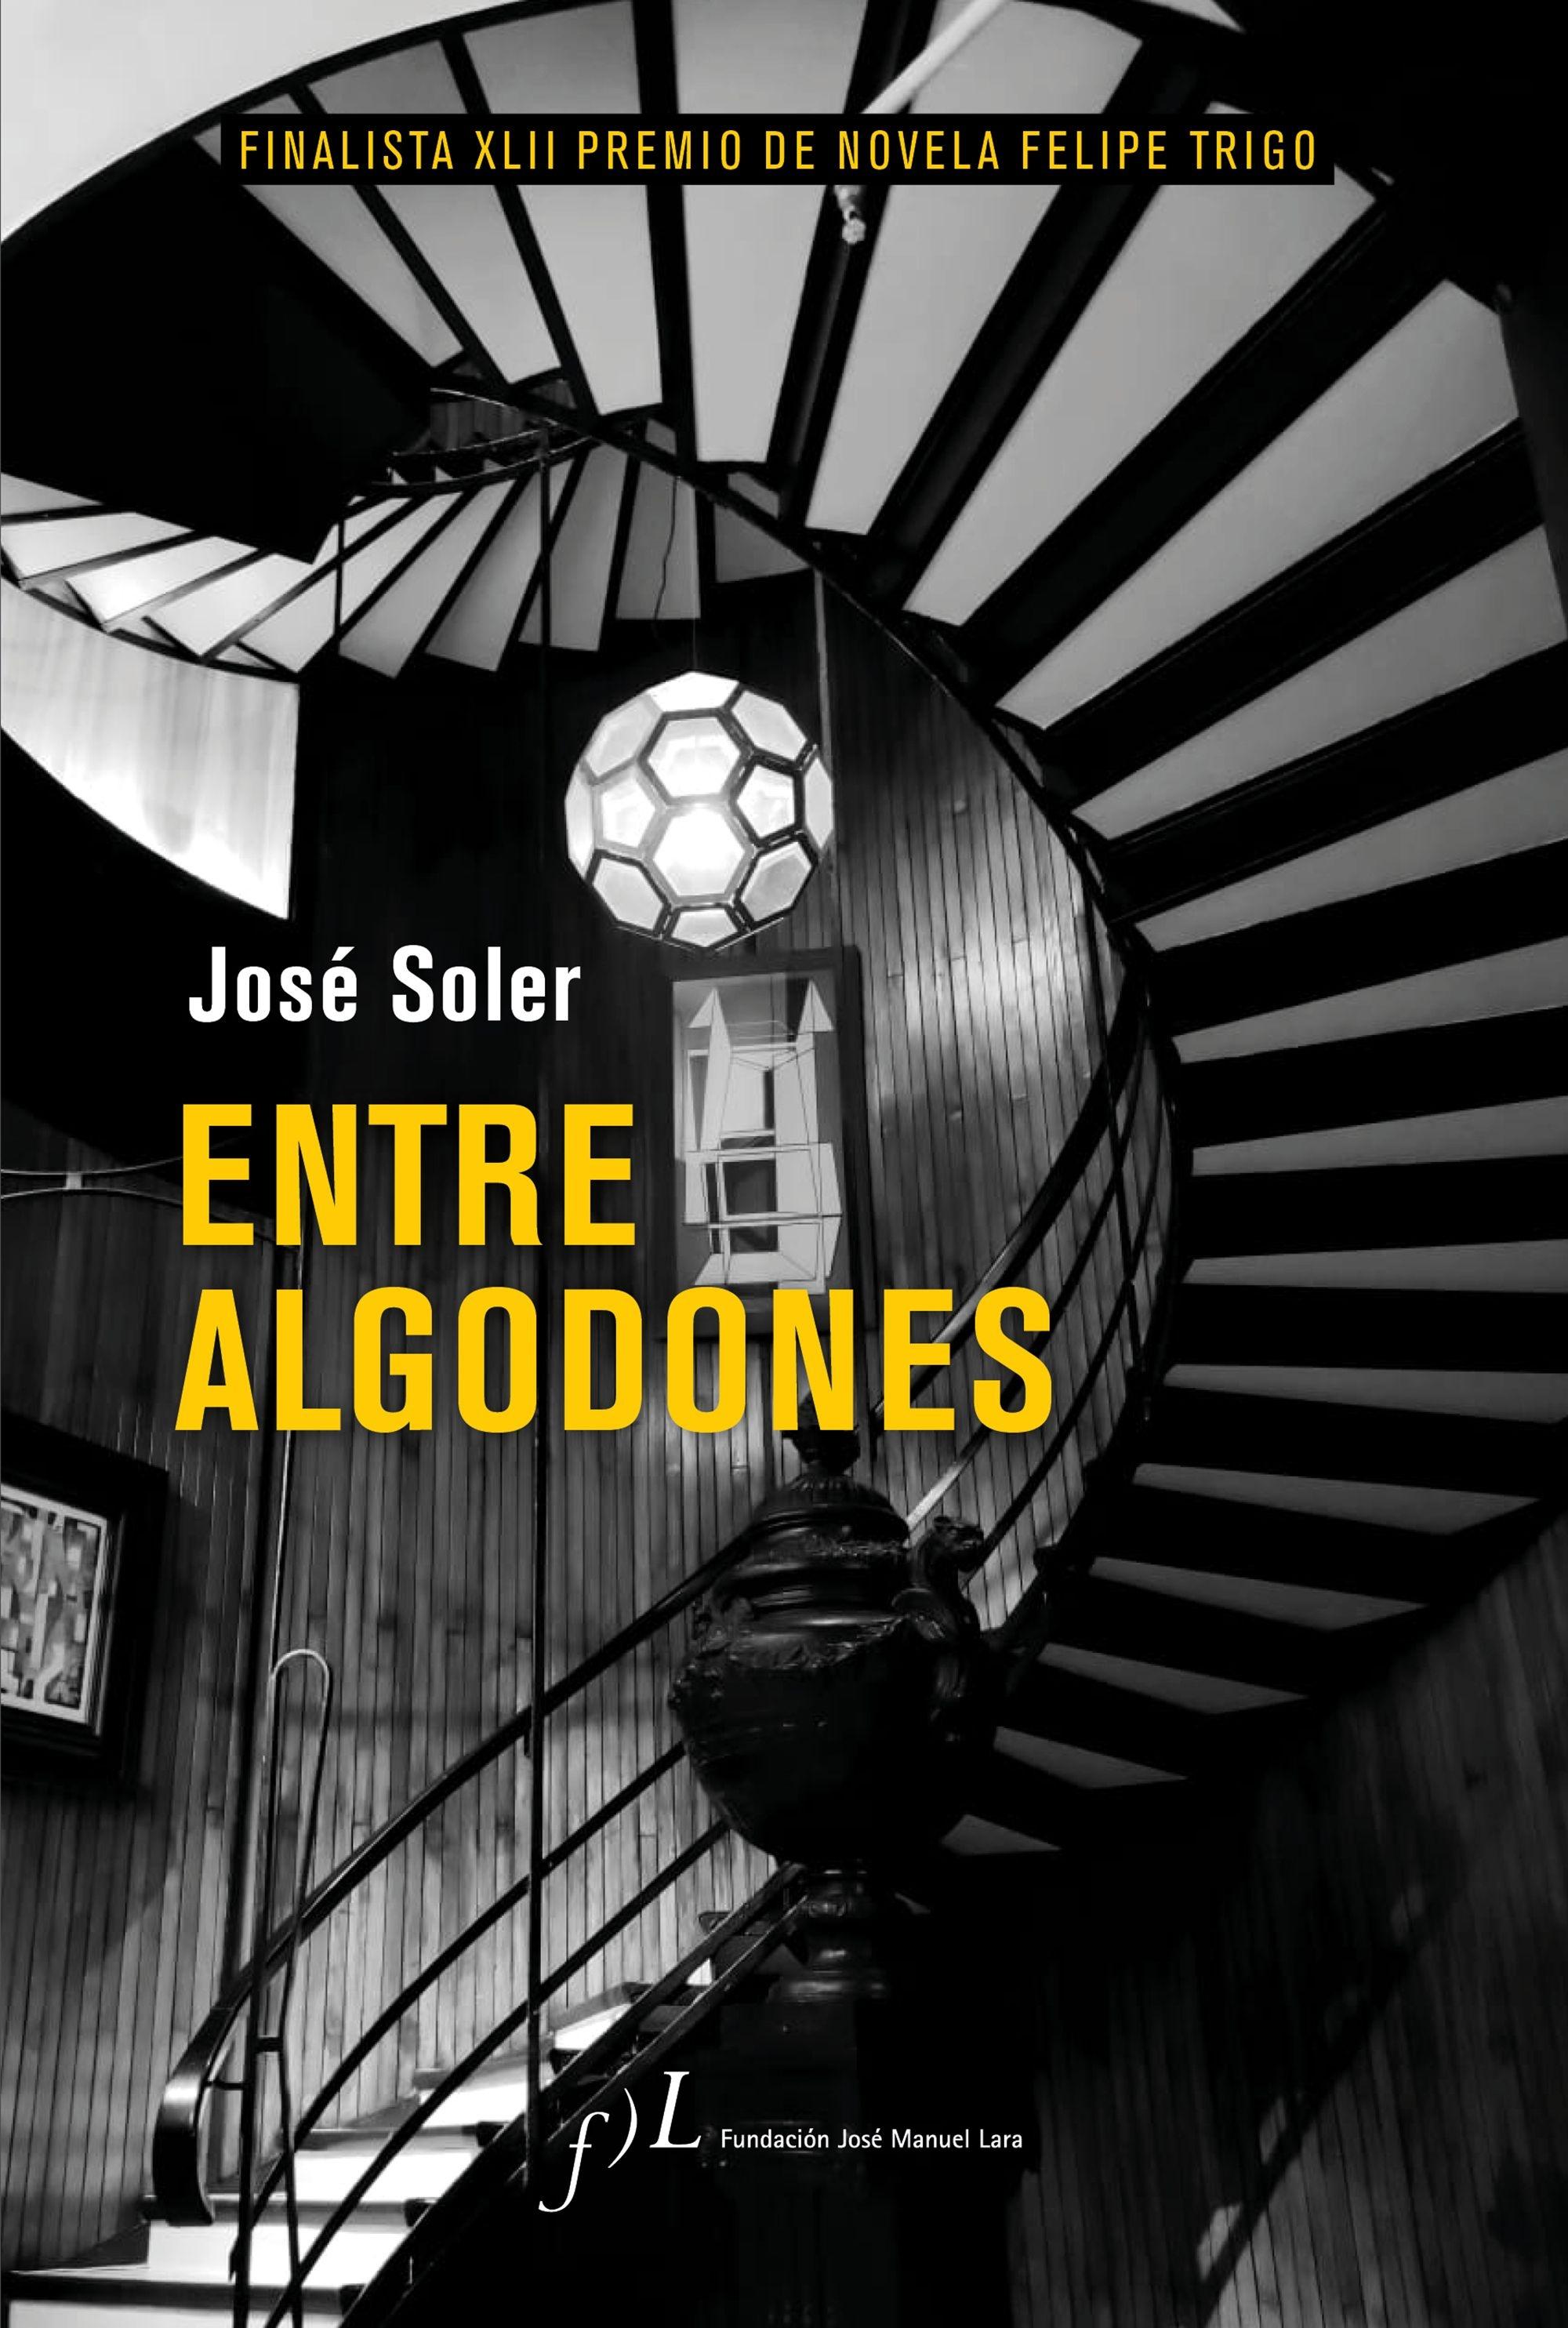 Entre Algodones "Finalista Xlii Premio de Novela Felipe Trigo"